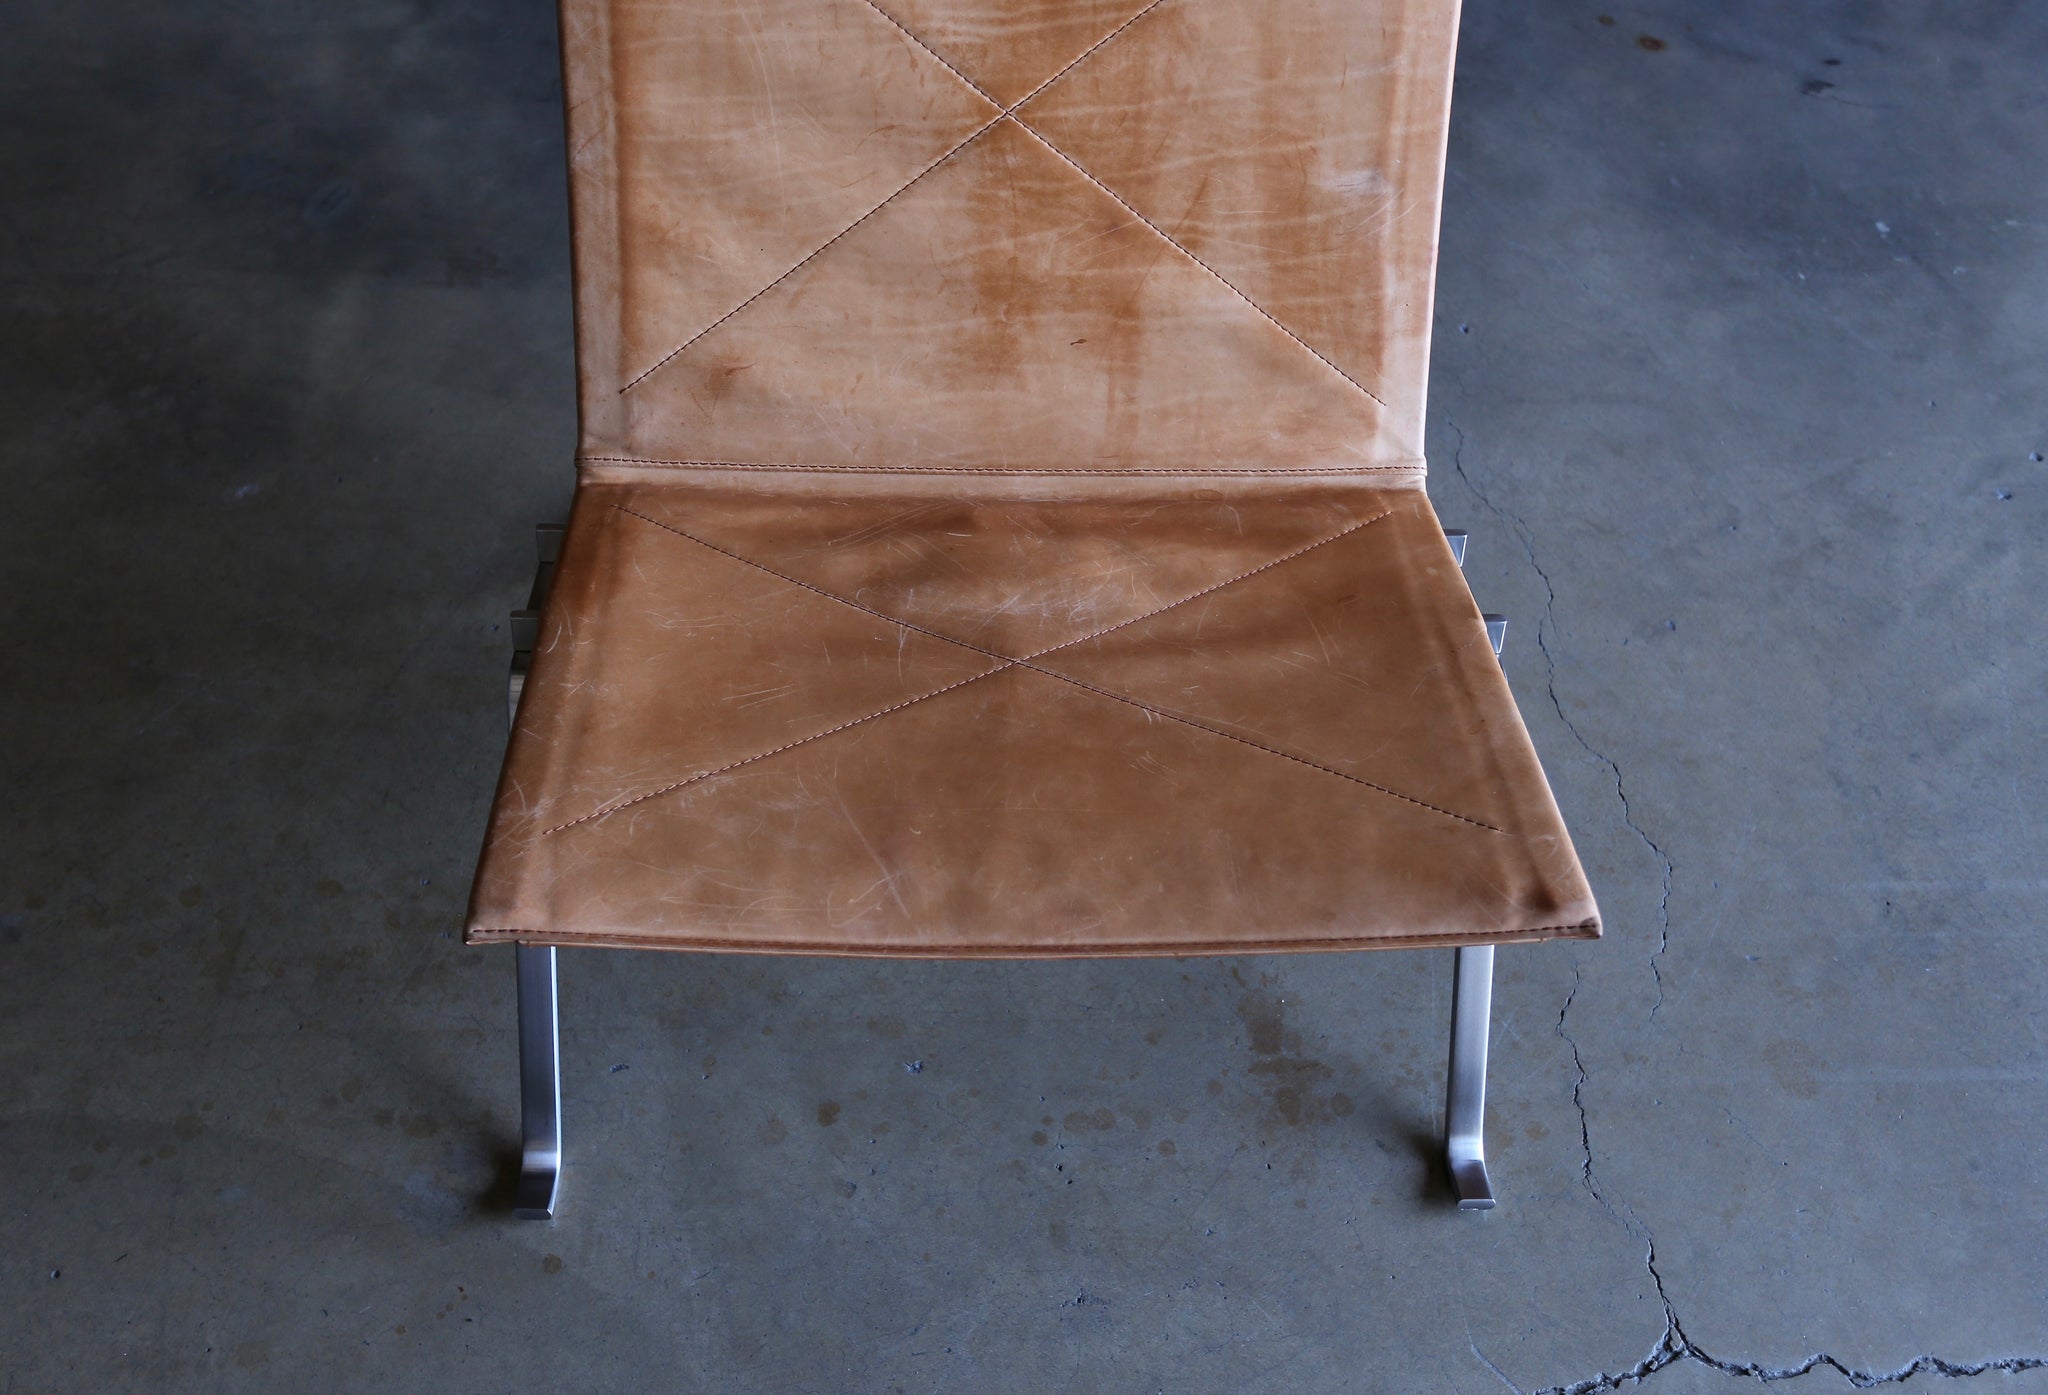 = SOLD = Poul Kjaerholm PK22 Lounge Chairs for Fritz Hansen 2008